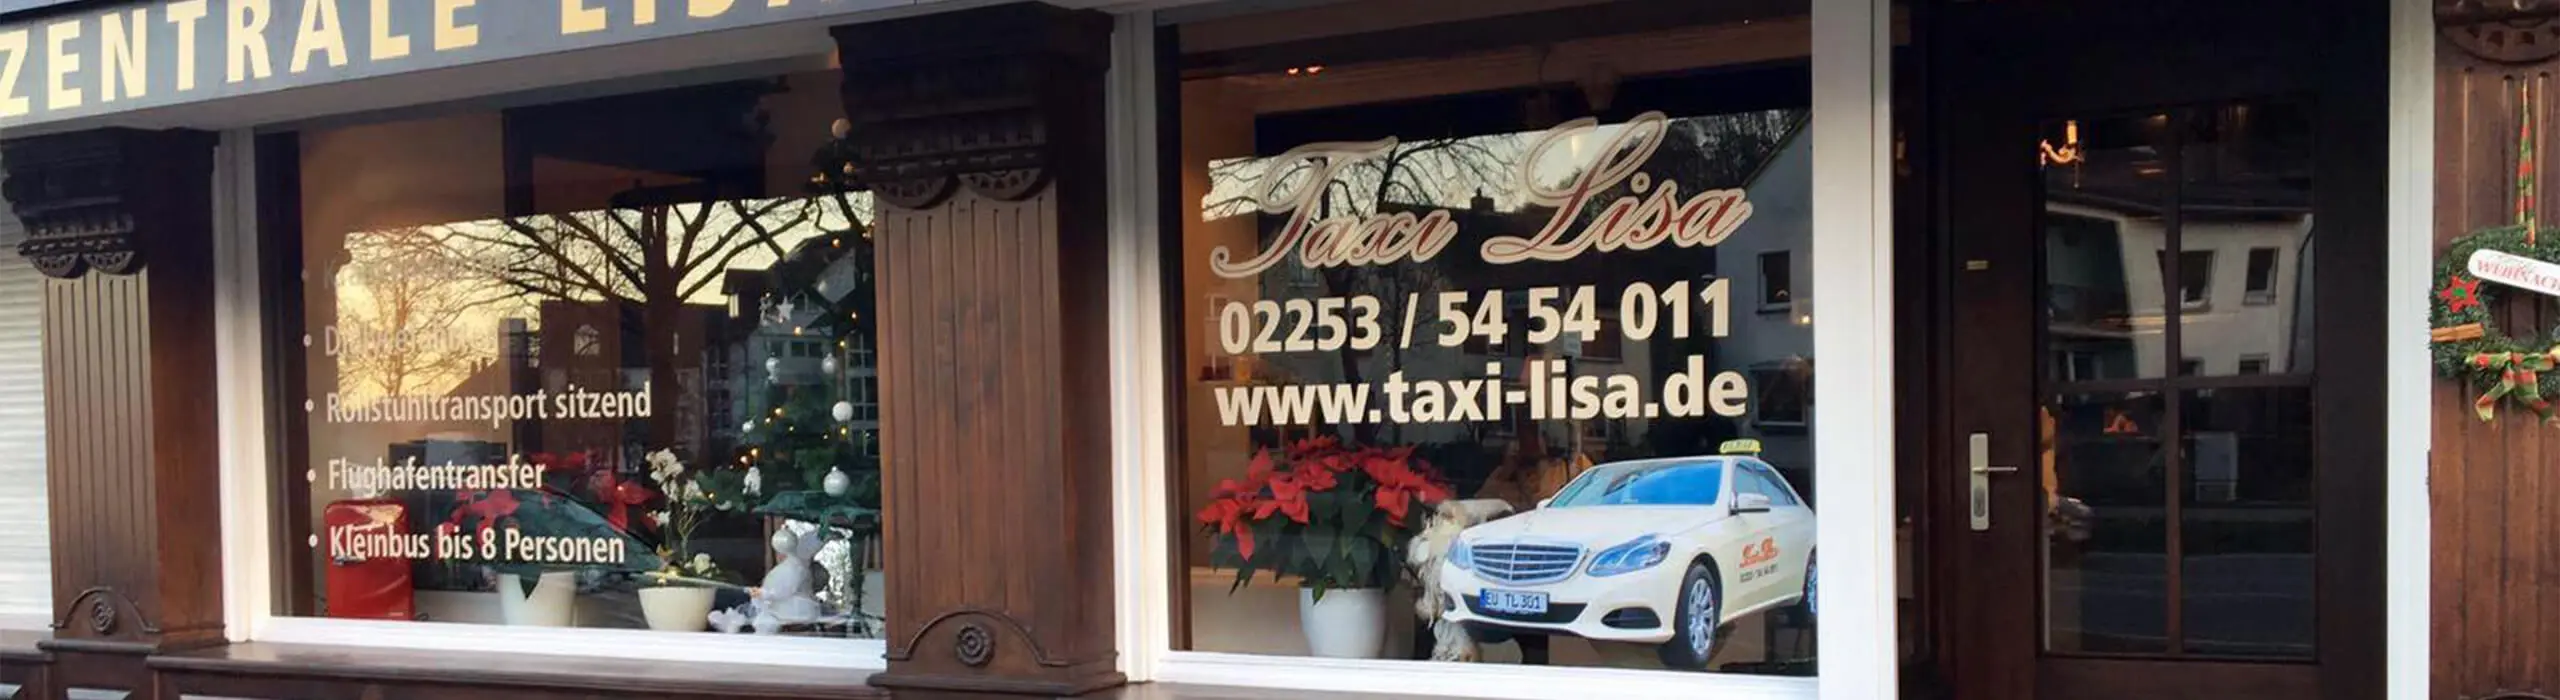  Taxi Lisa GmbH & Co.KG